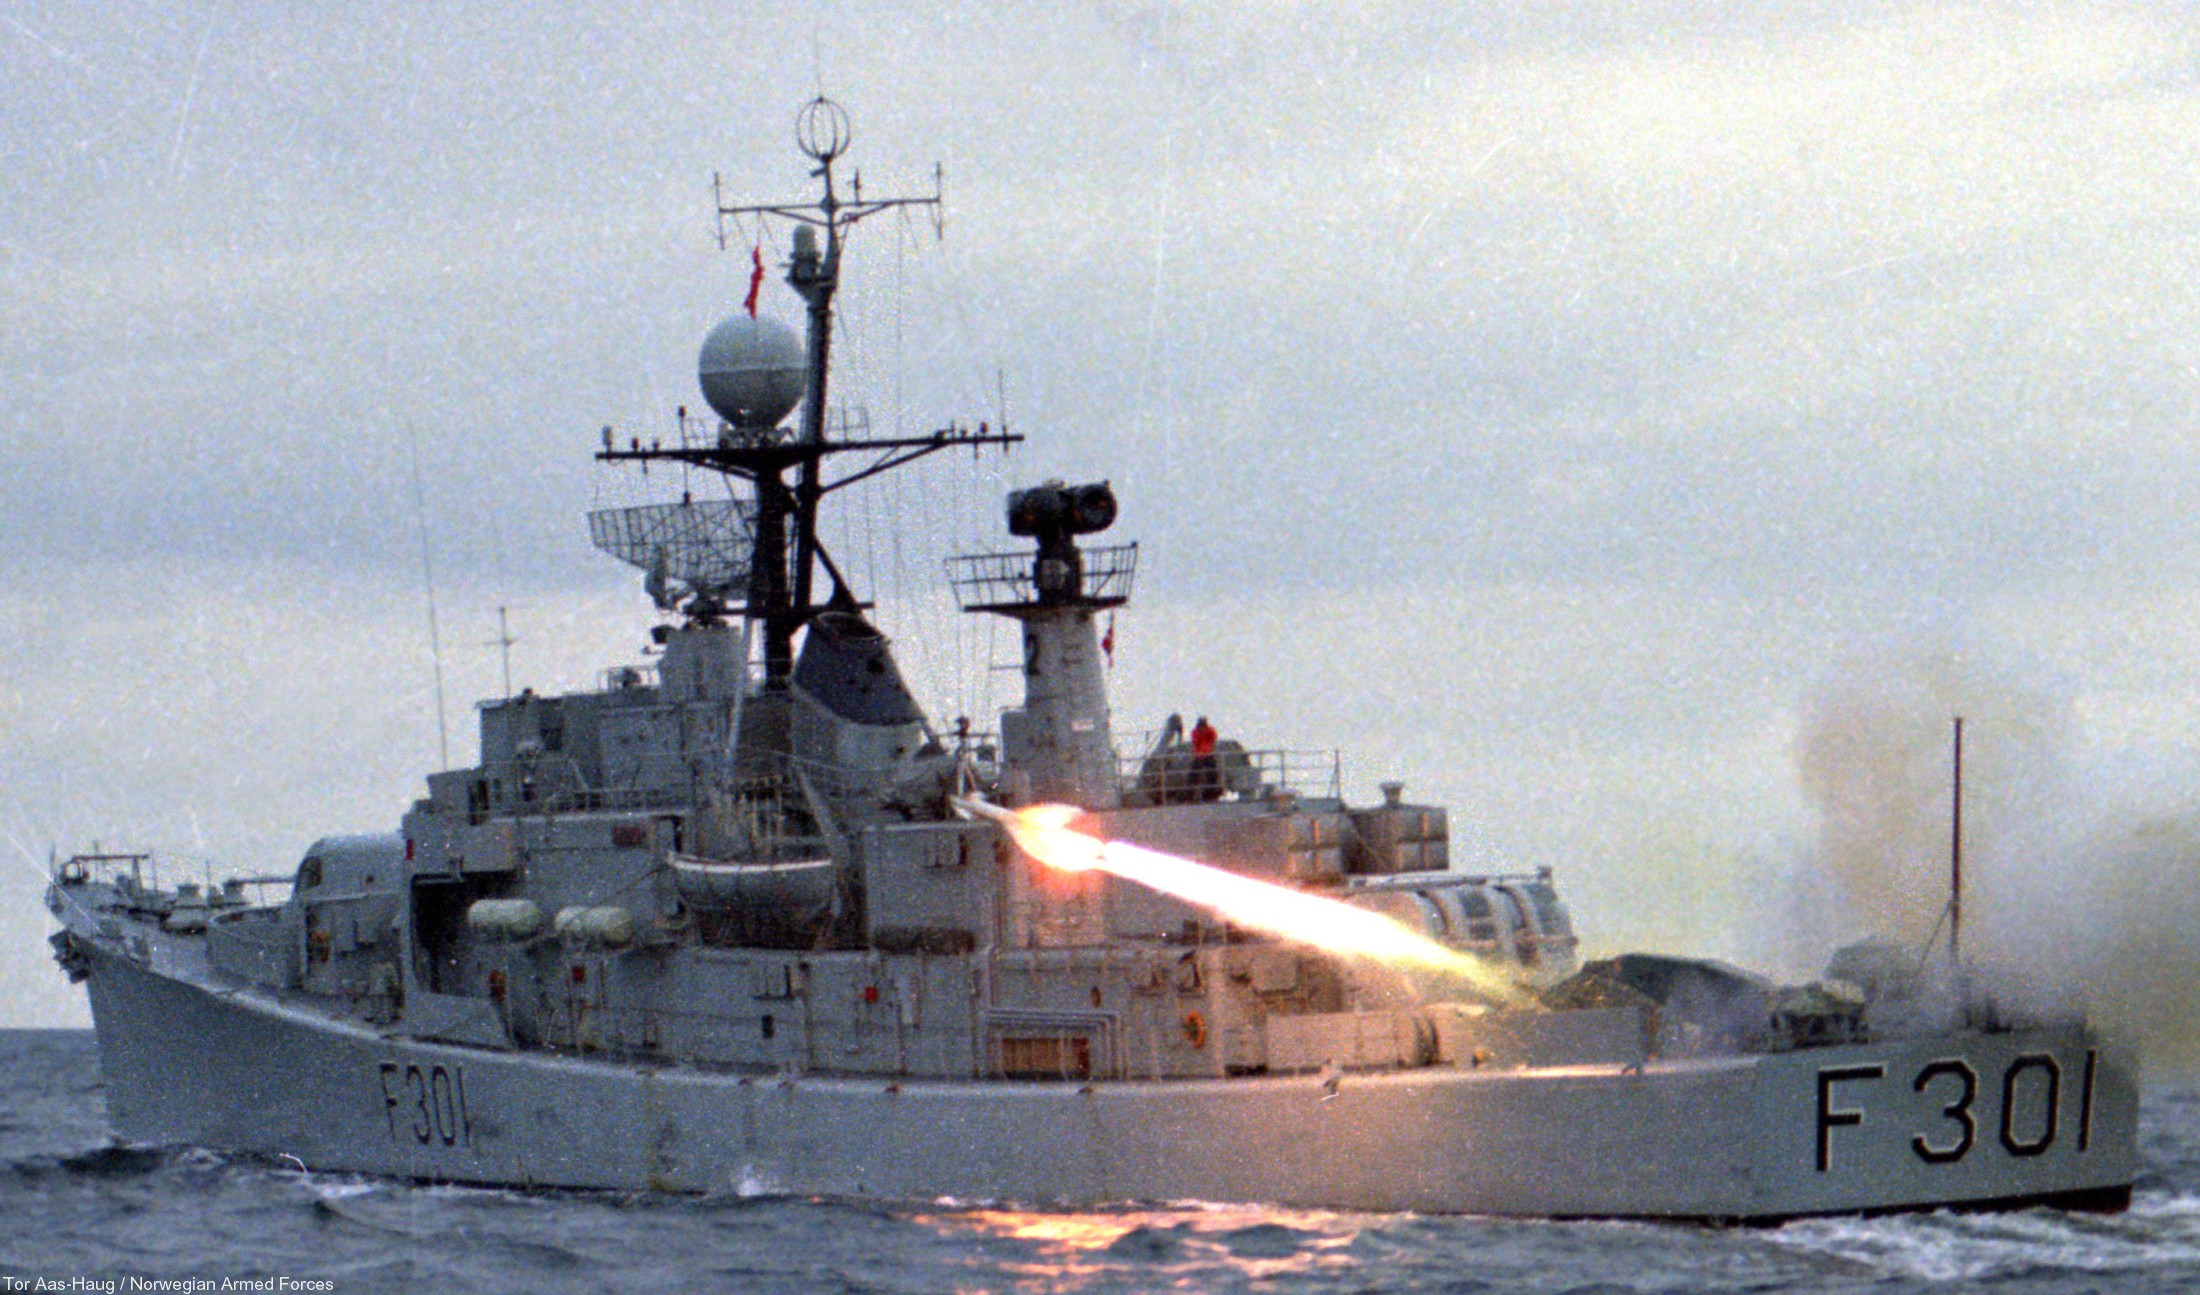 oslo class frigate royal norwegian navy agm-119 kongsberg penguin ssm missile anti-ship